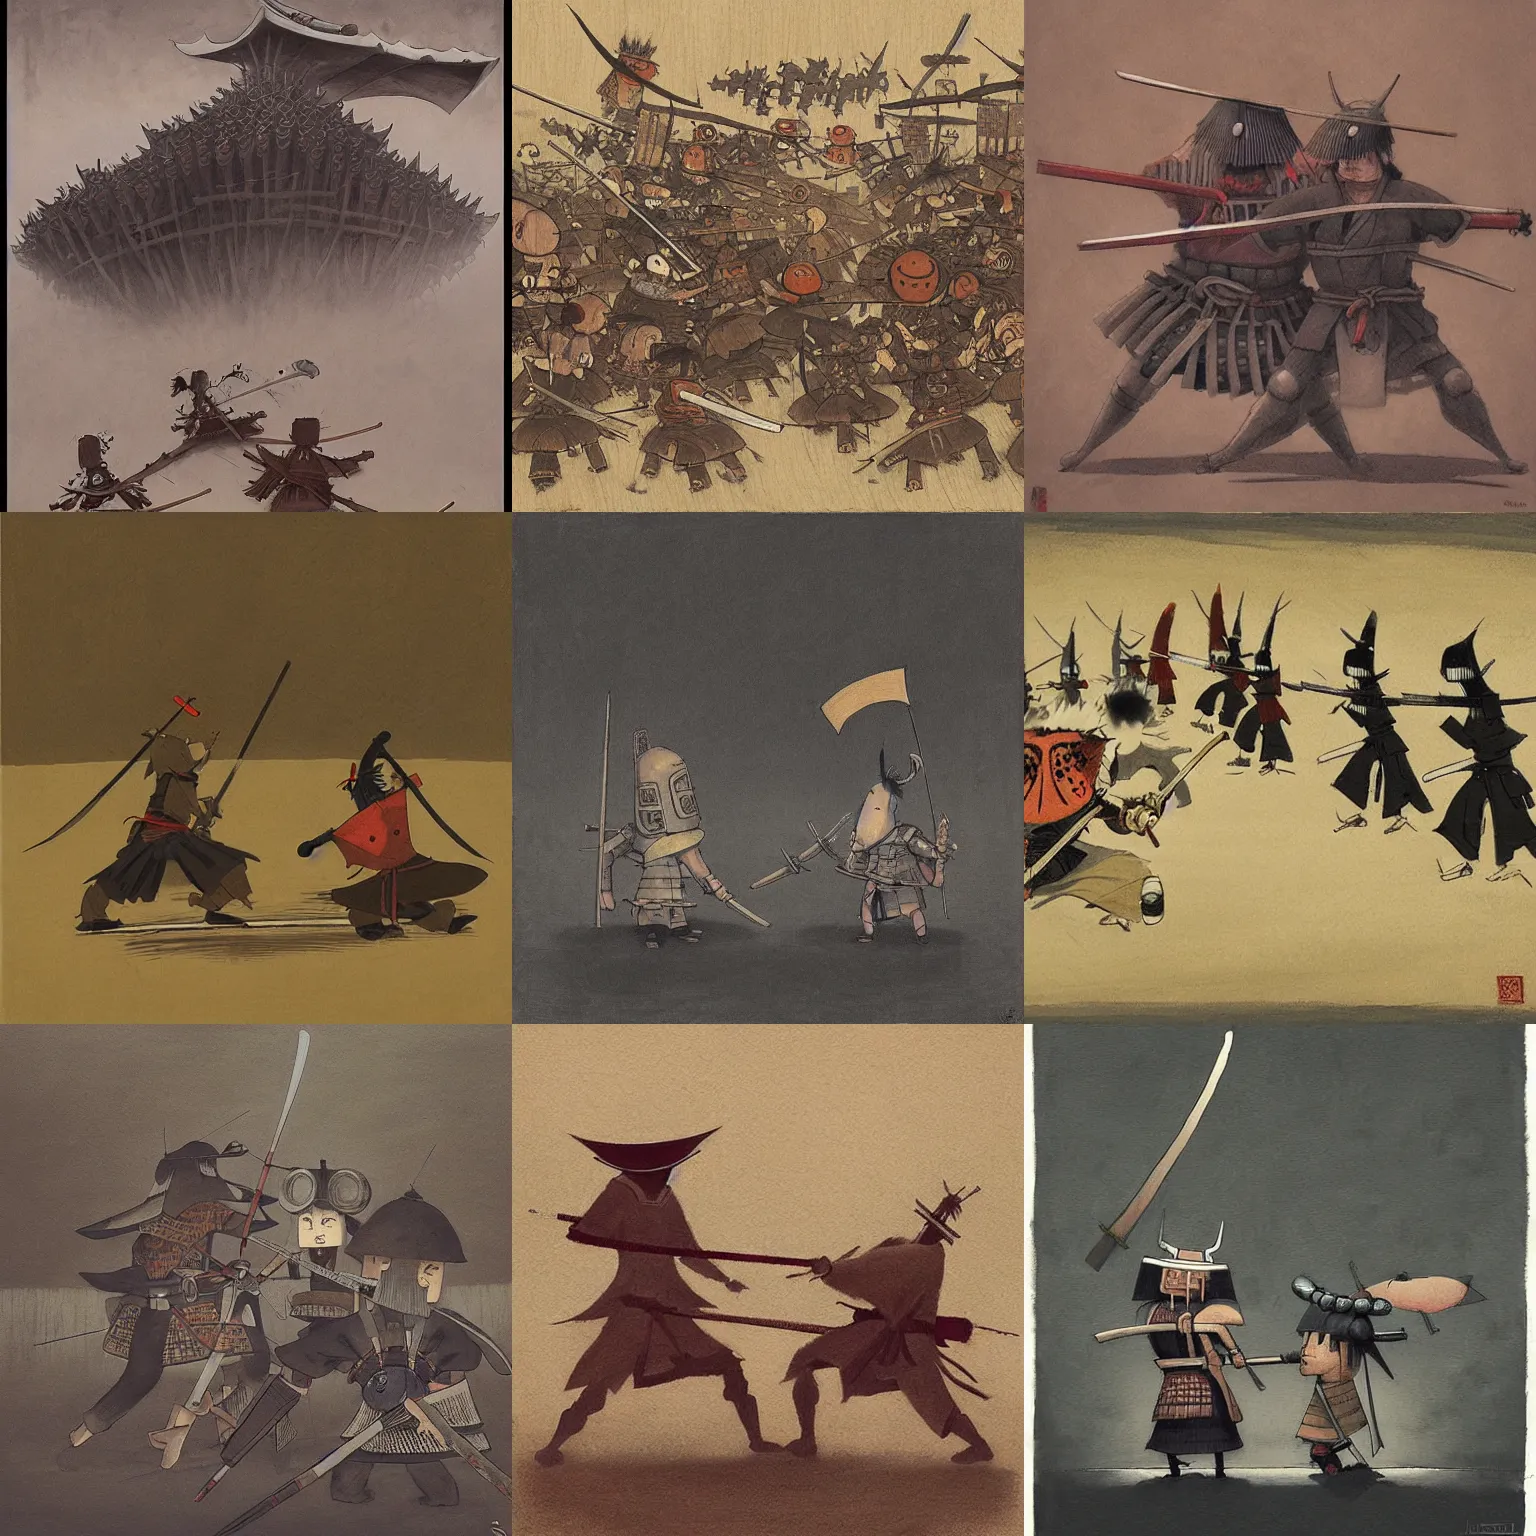 Prompt: samurai battle by shaun tan, style of john kenn mortensen